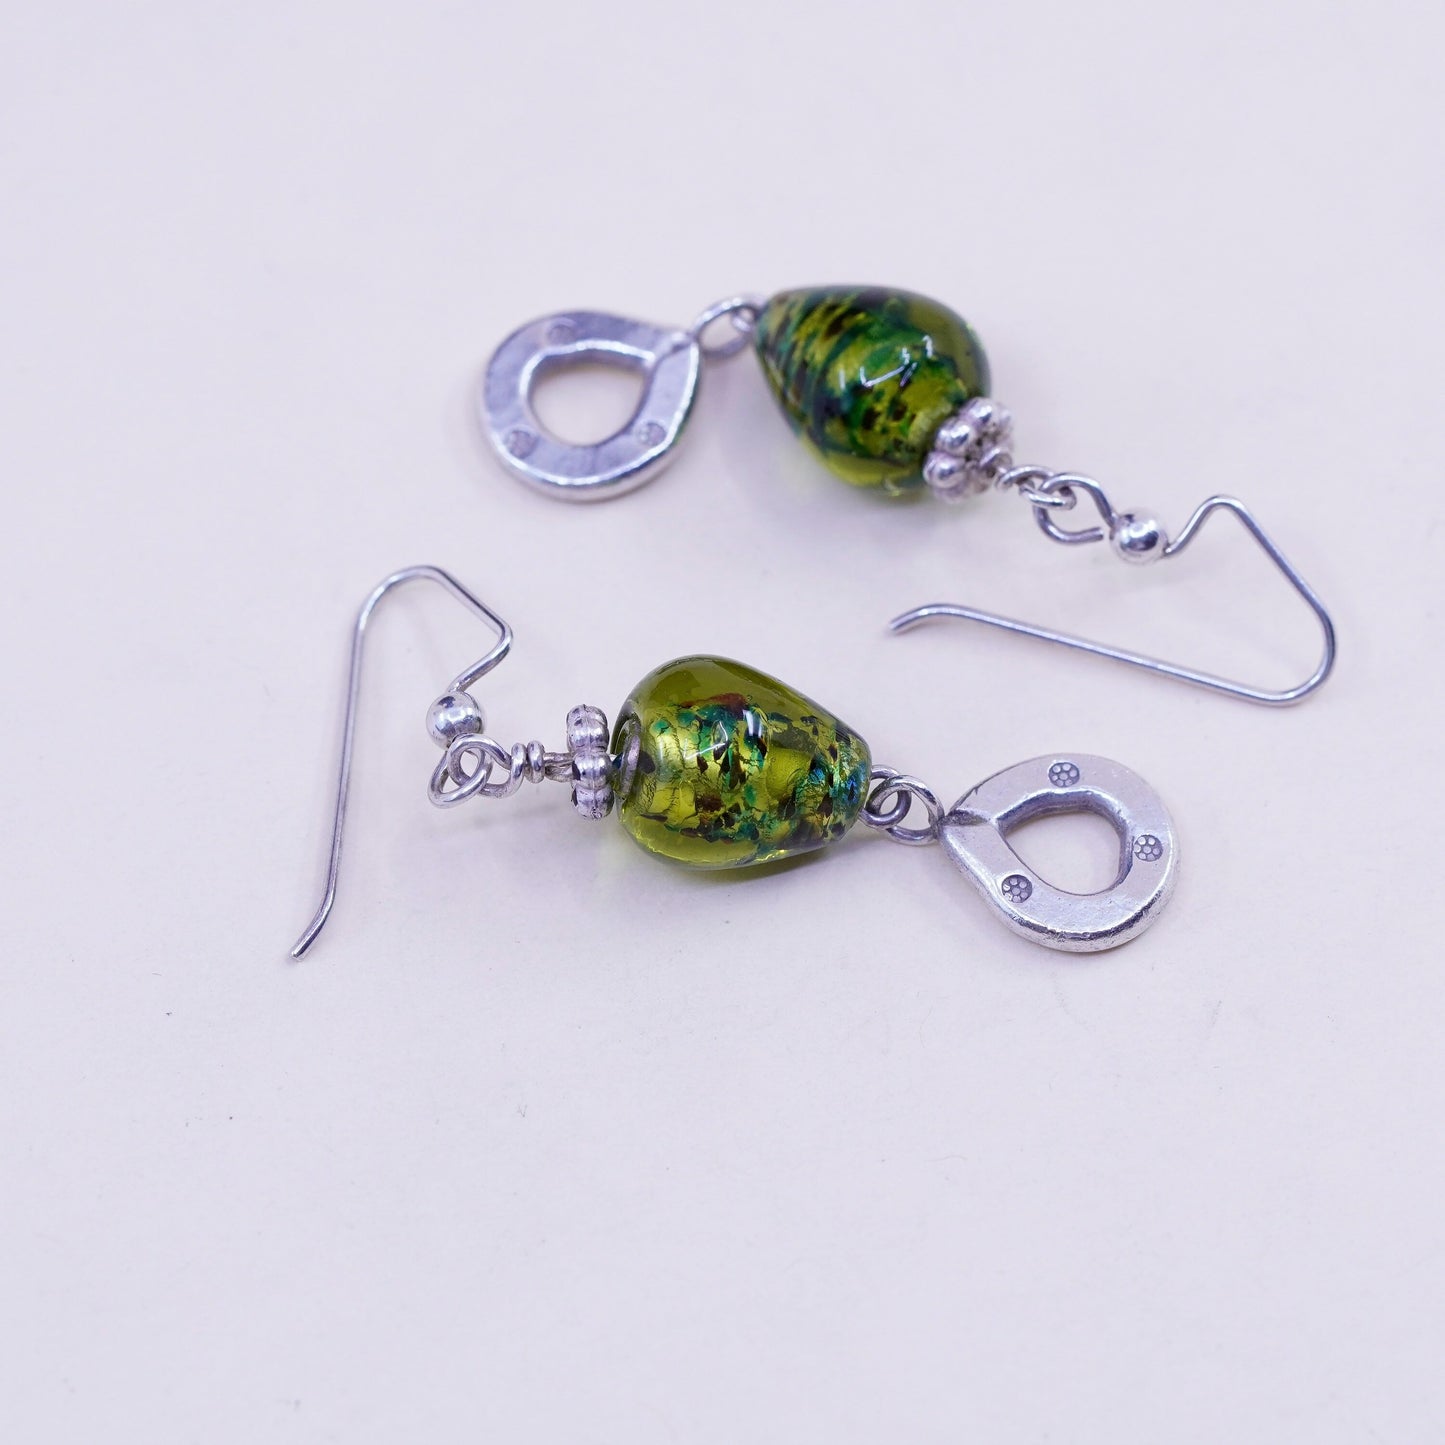 Vintage Sterling 925 silver handmade earrings with green teardrop glass dangles